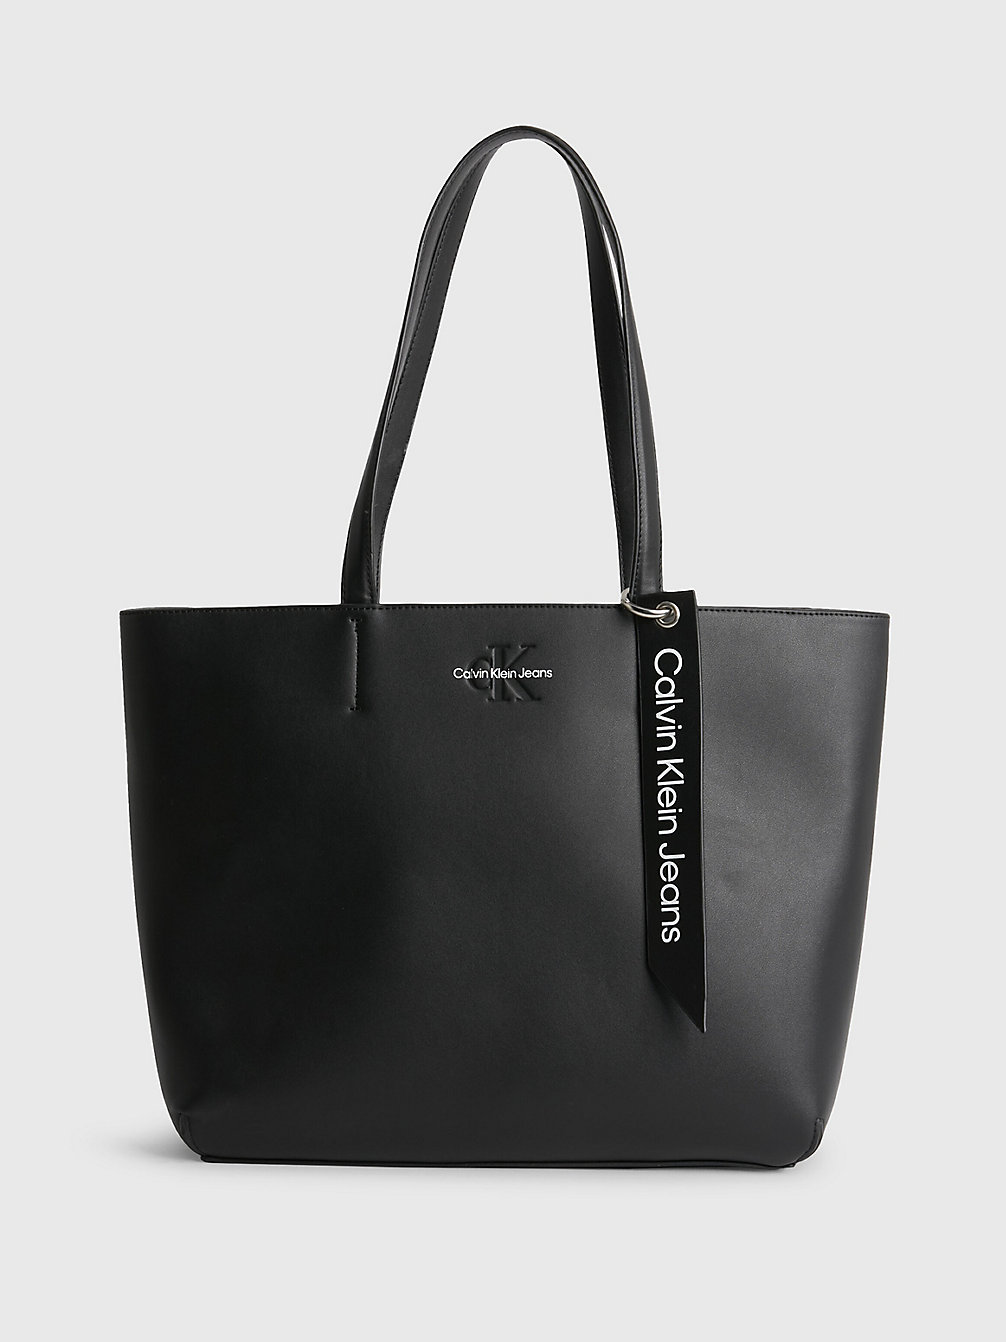 BLACK Tote Bag undefined women Calvin Klein